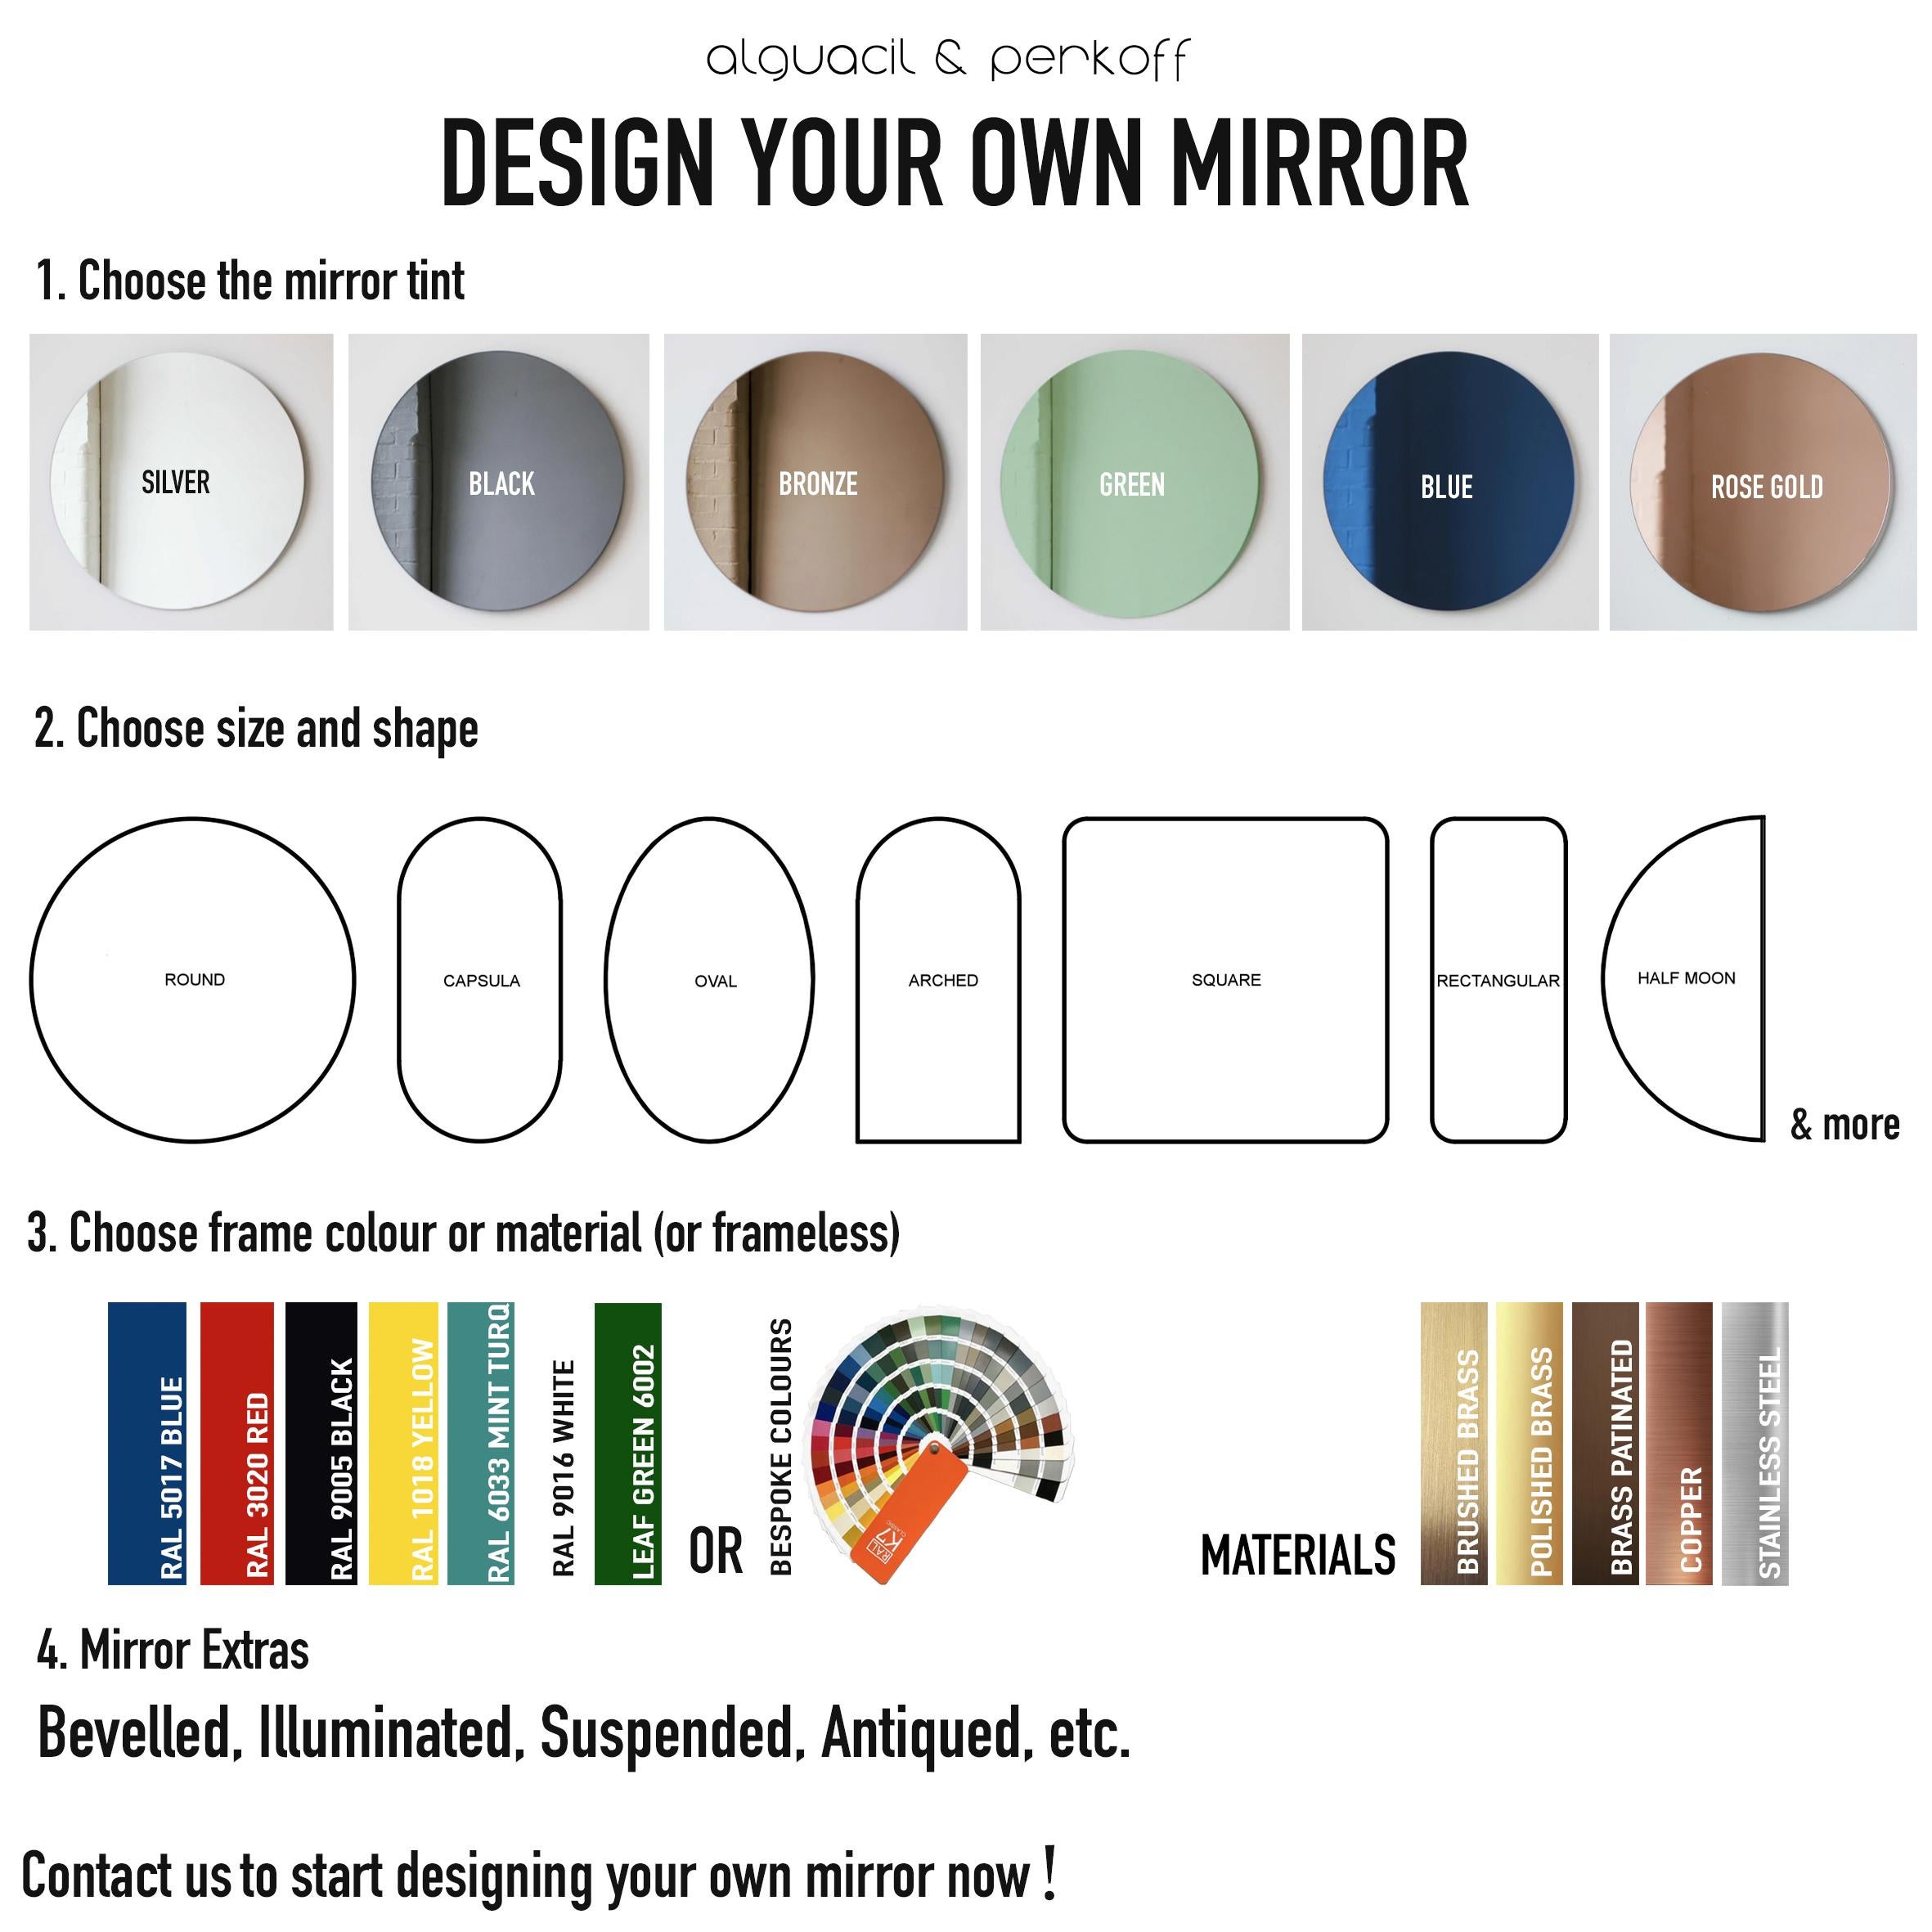 Powder-Coated Orbis Dualis Mixed Black Tint Minimalist Round Mirror with Black Frame, Medium For Sale